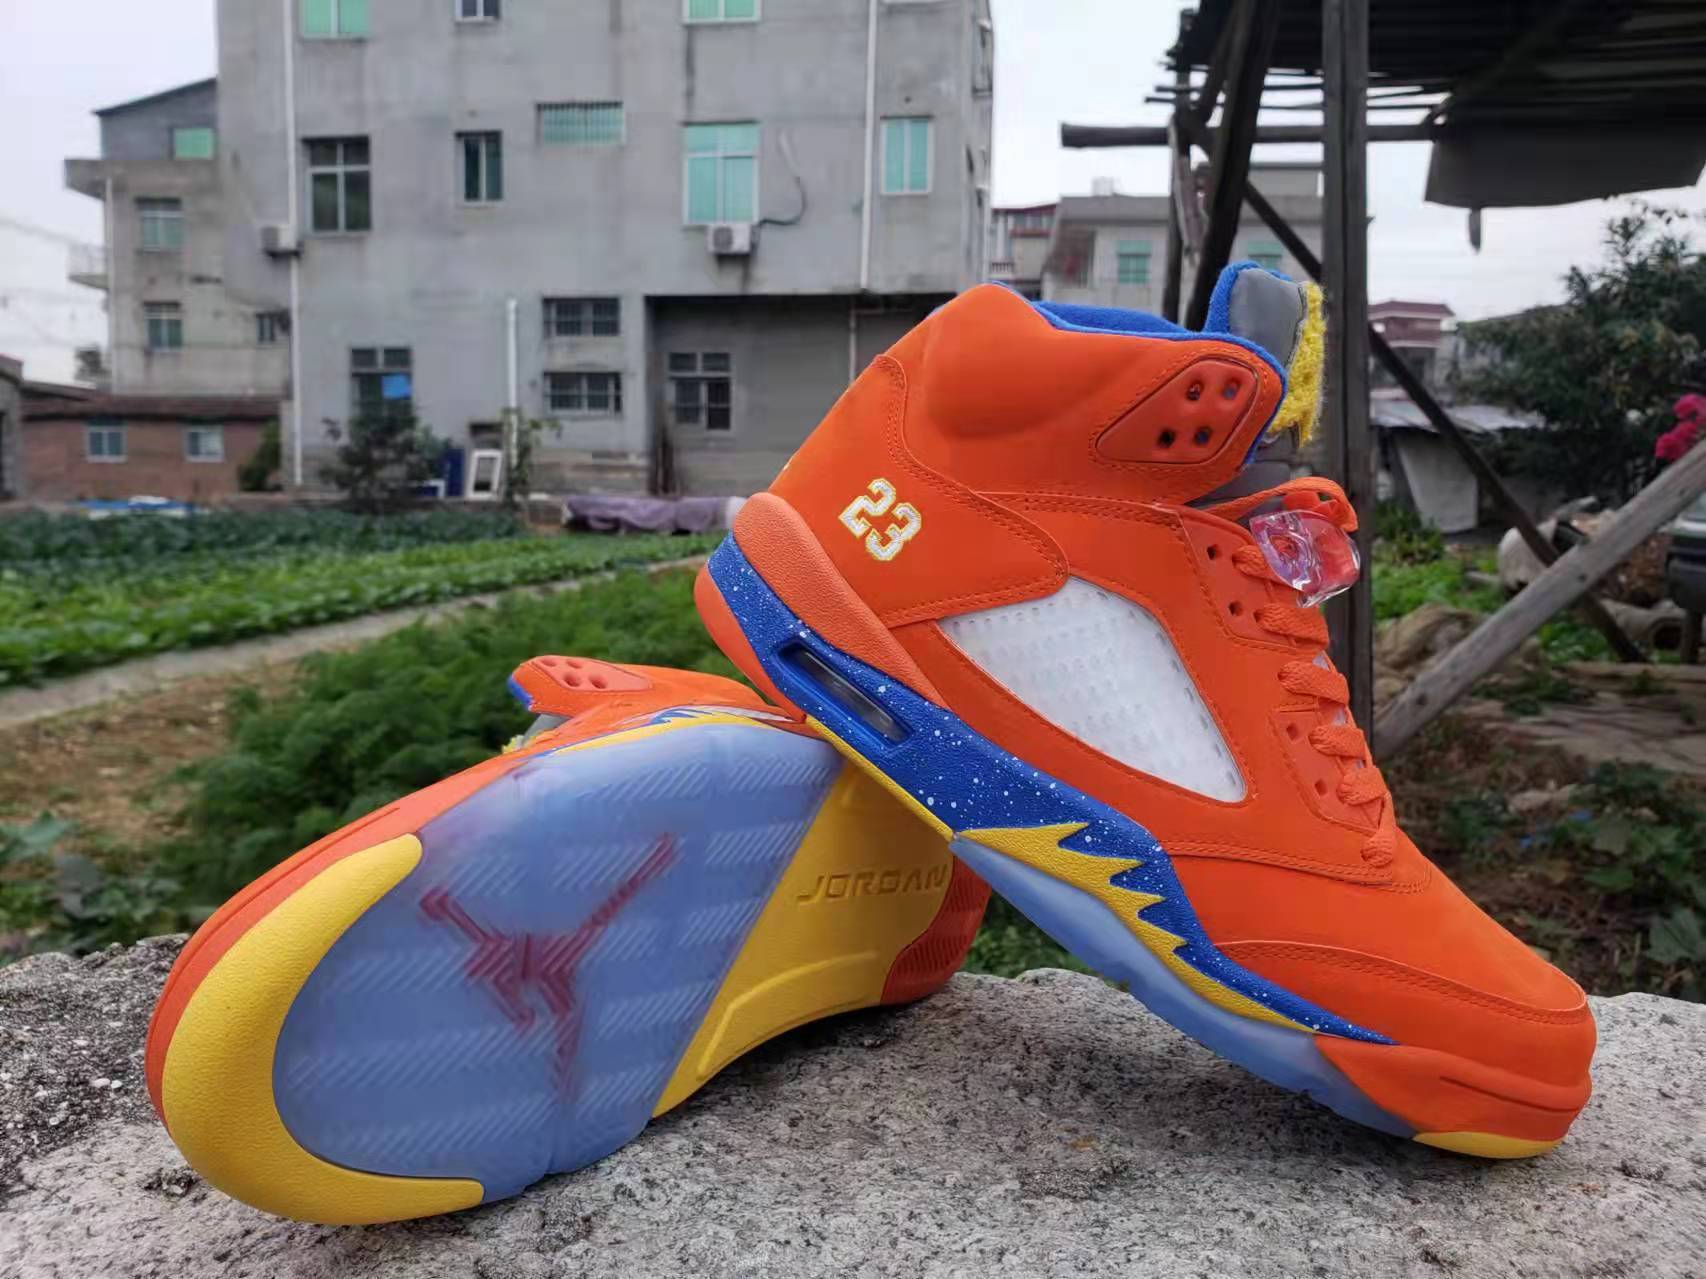 New 2022 Air Jordan 5 Retro Orange Yellow Blue Shoes